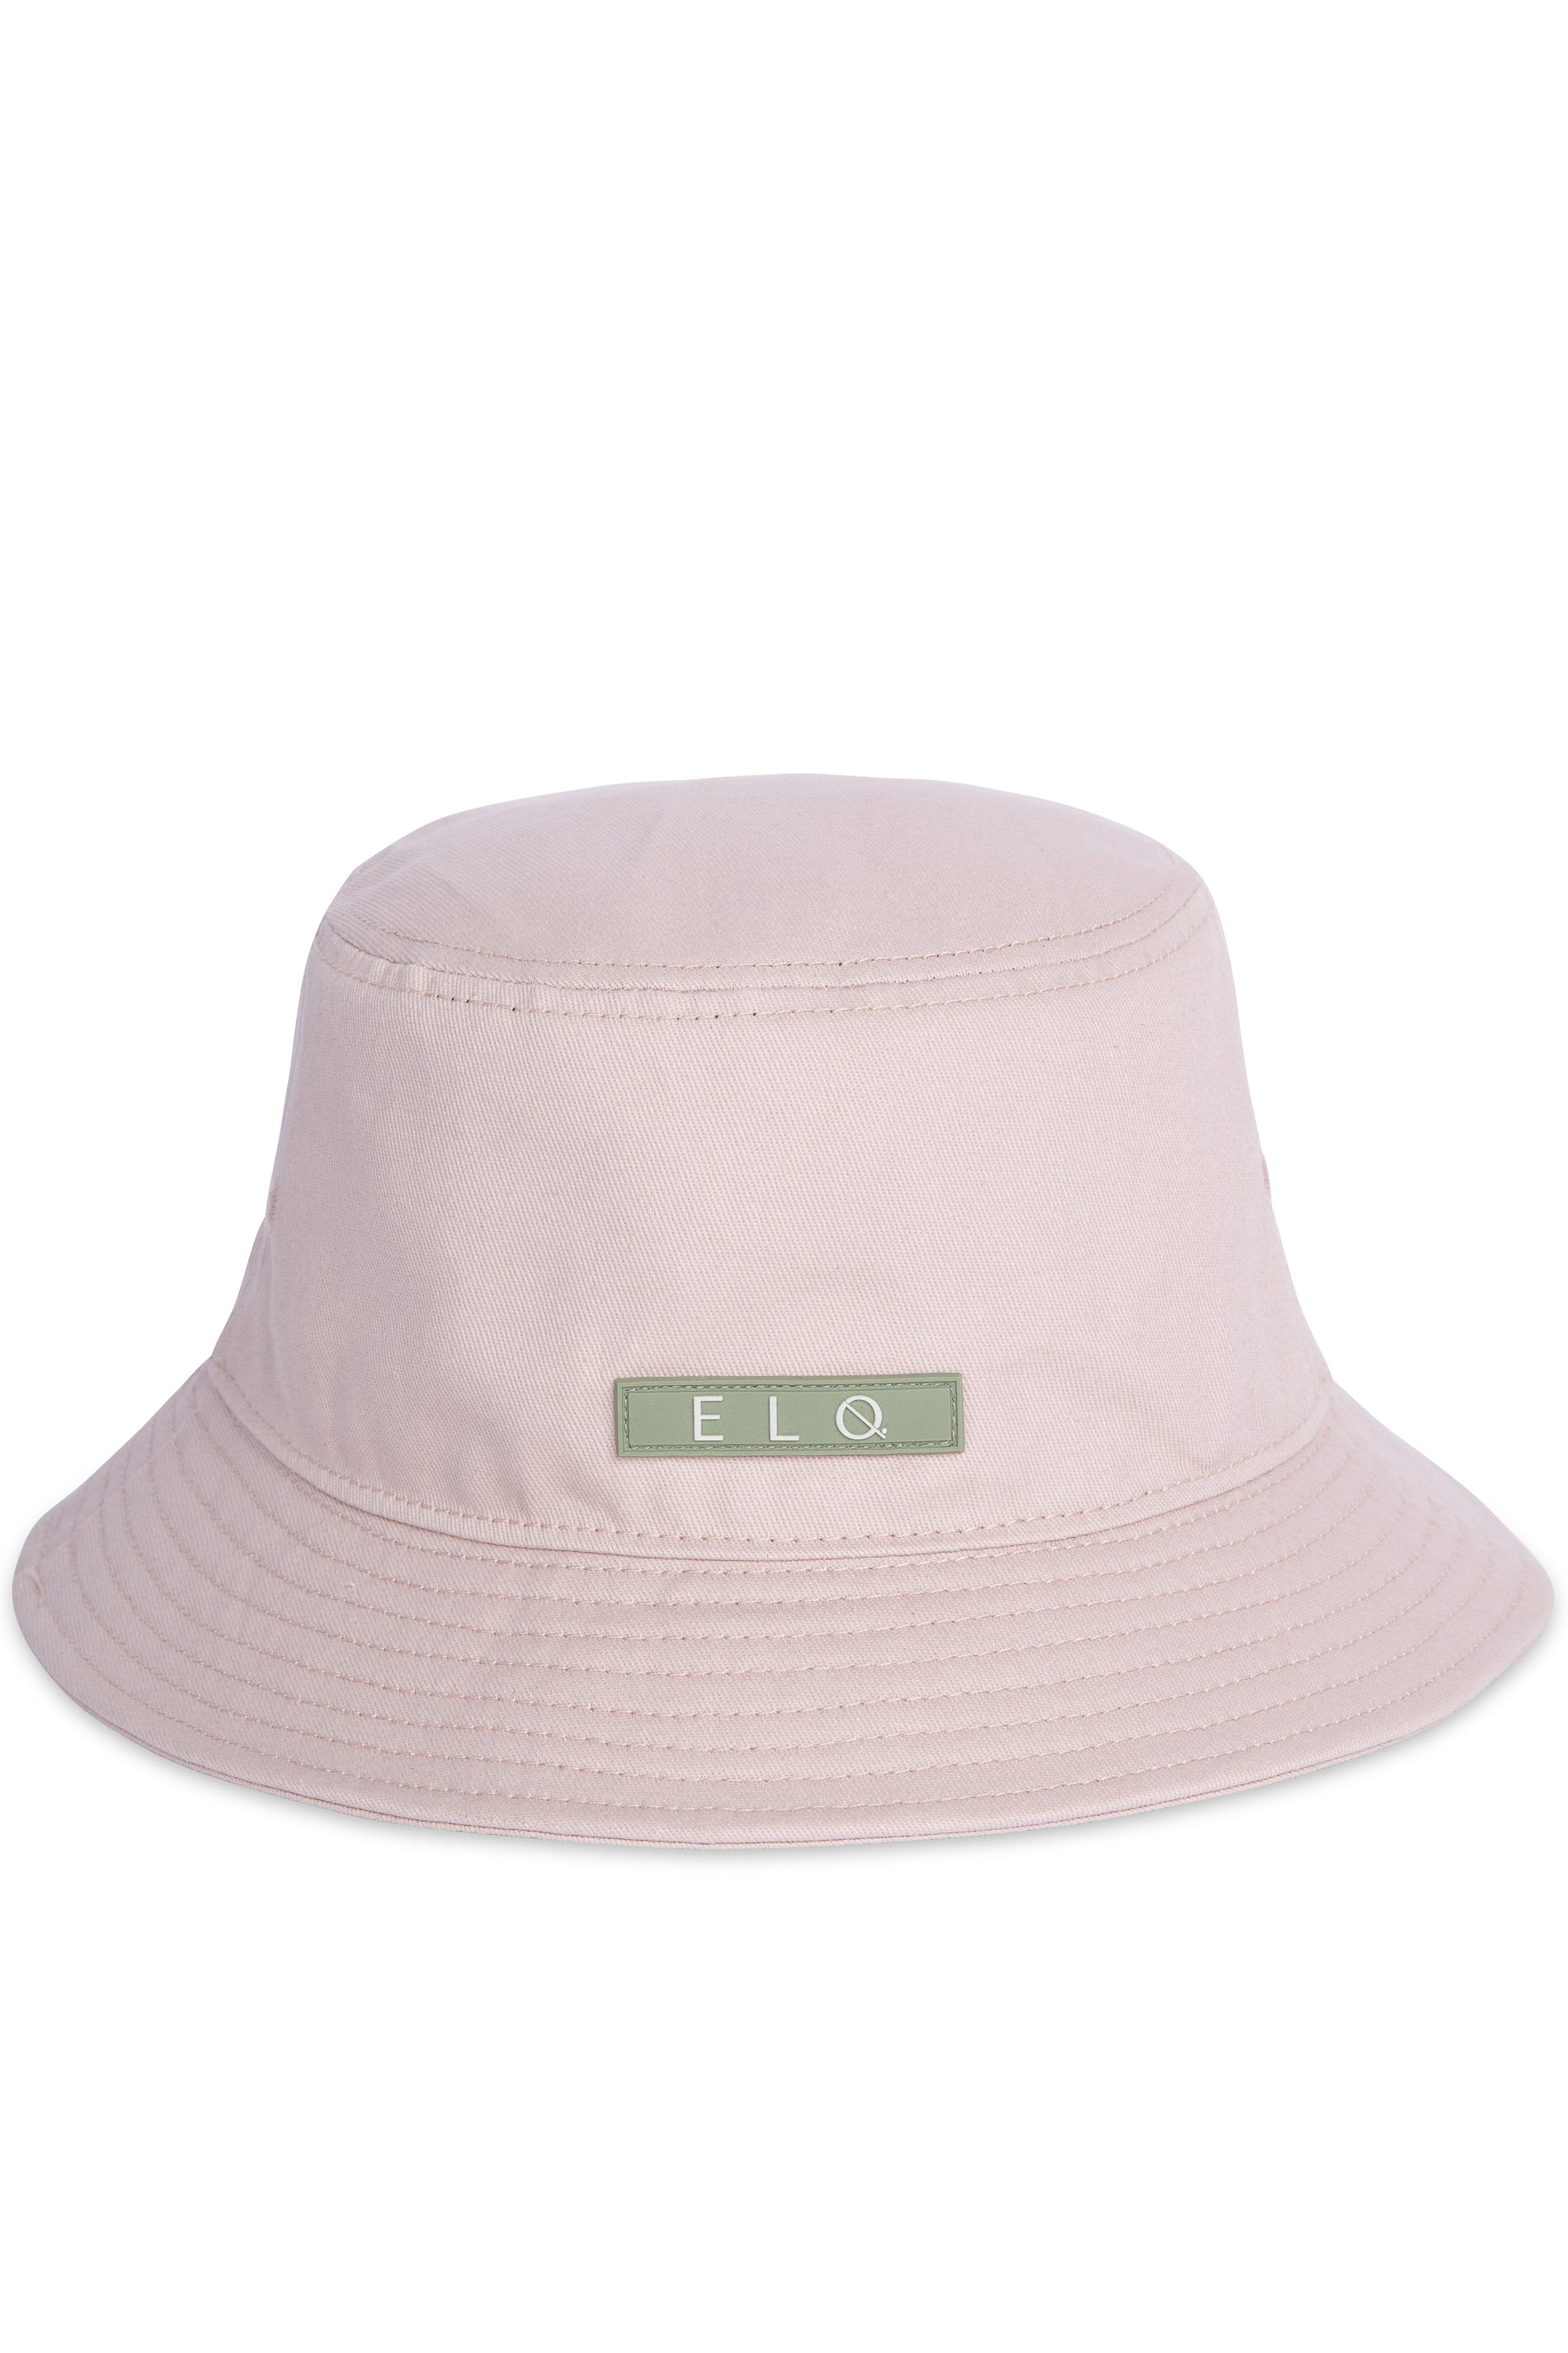 Woven Designer Bucket Hat, ELQ